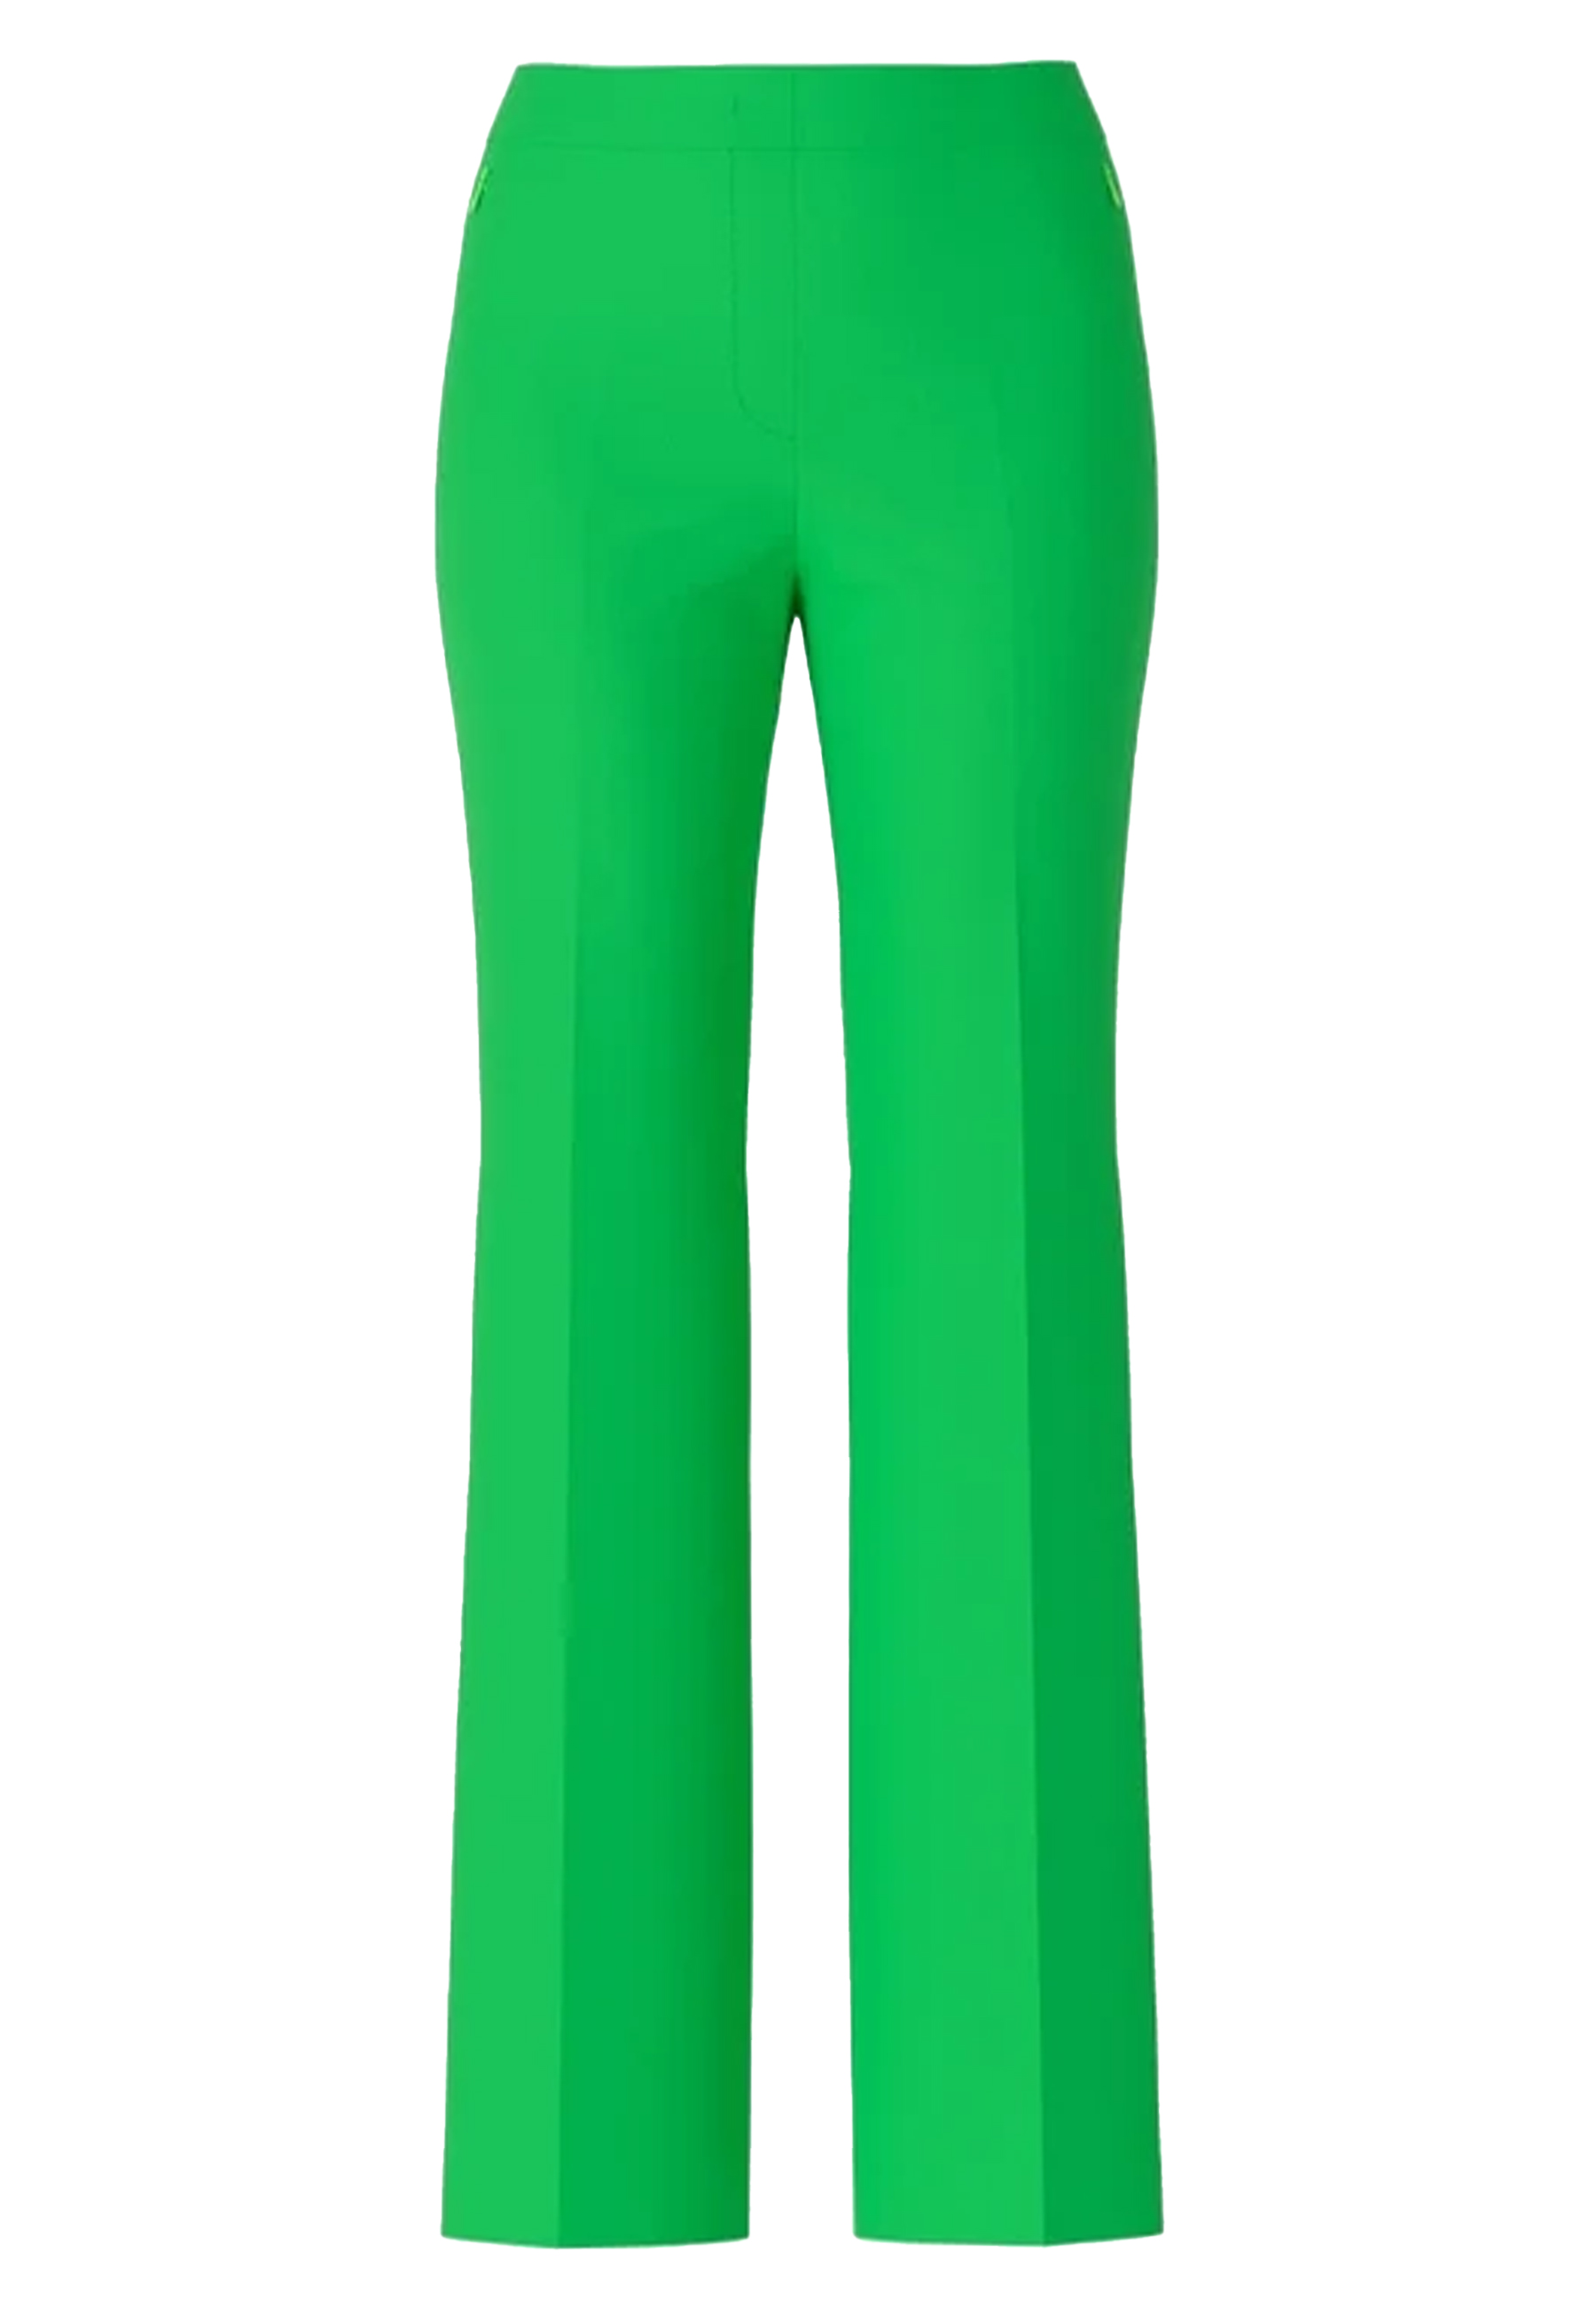 Marccain pantalons groen Dames maat 36